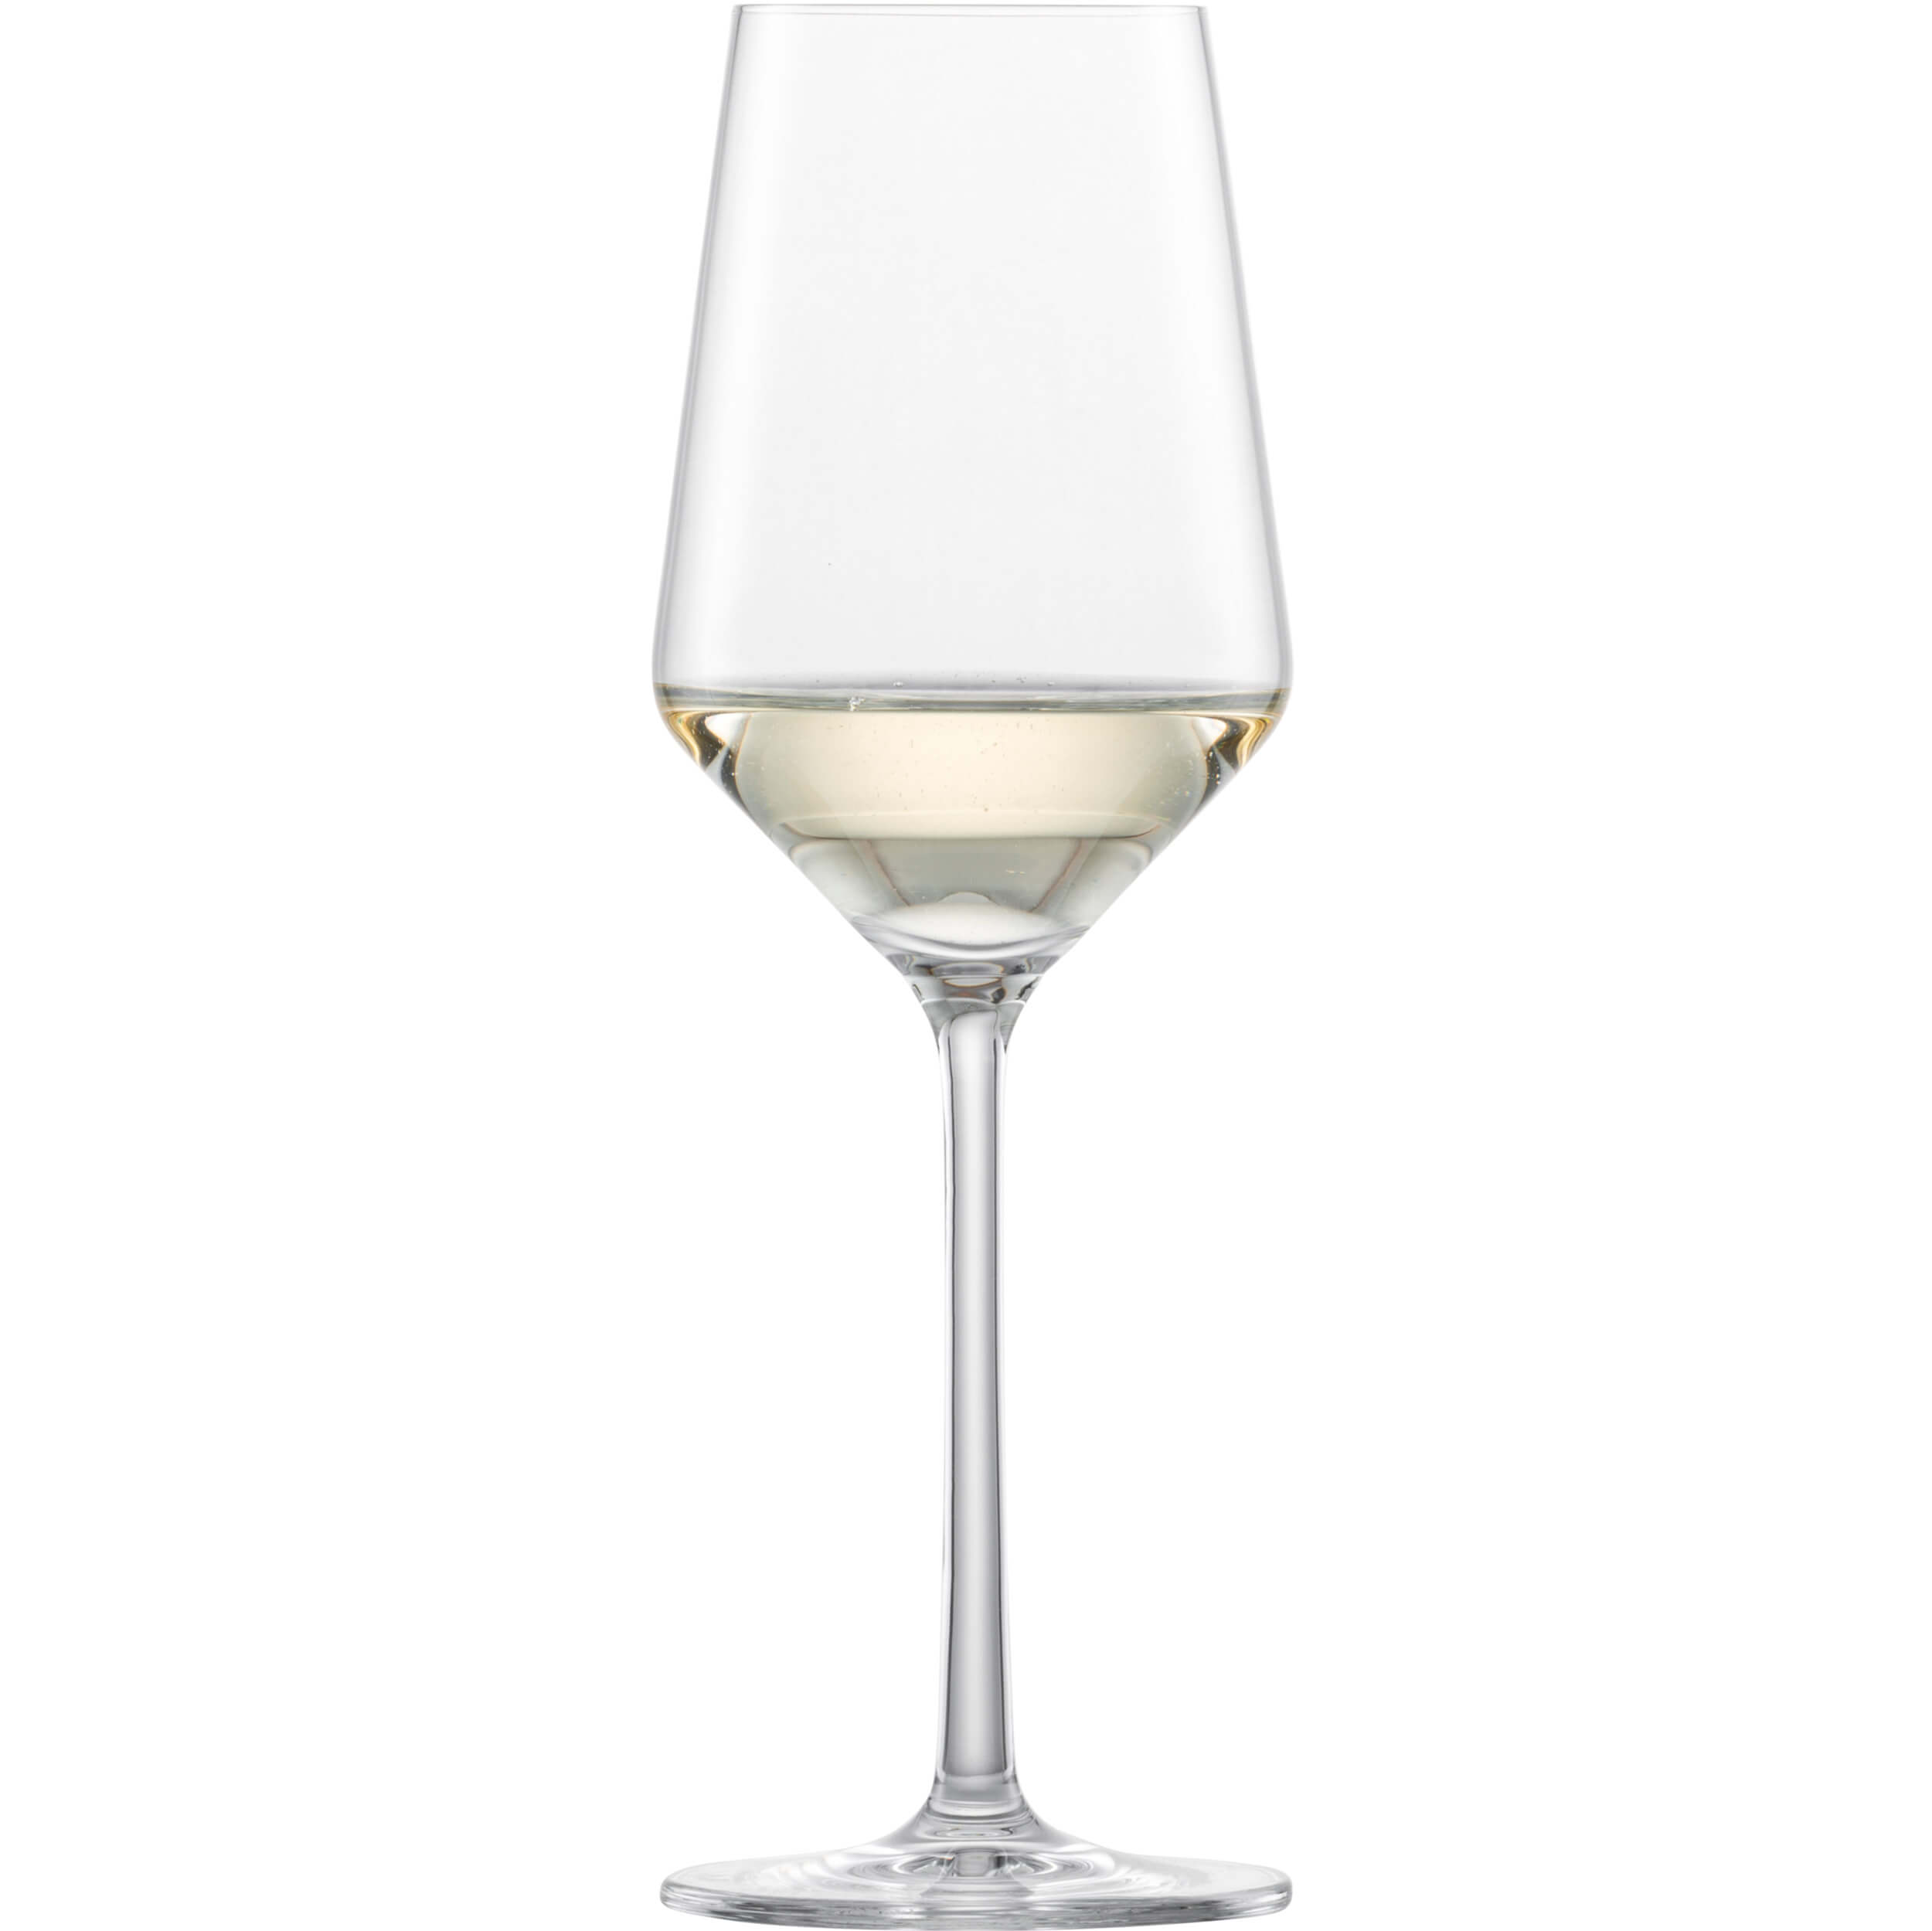 Weißweinglas Riesling Belfesta, Zwiesel Glas - 300ml (1 Stk.)